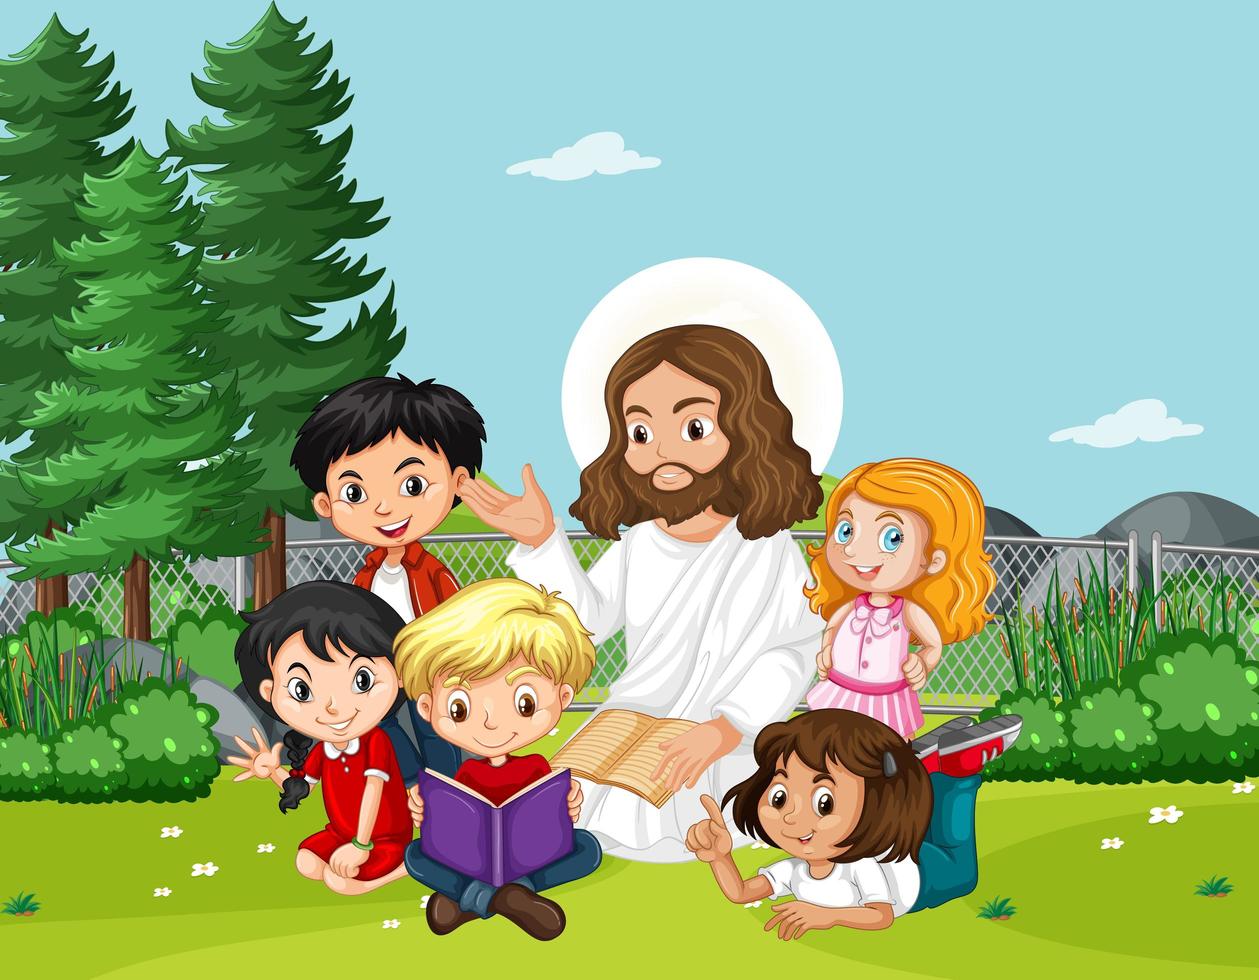 Jesus with children in the park vector